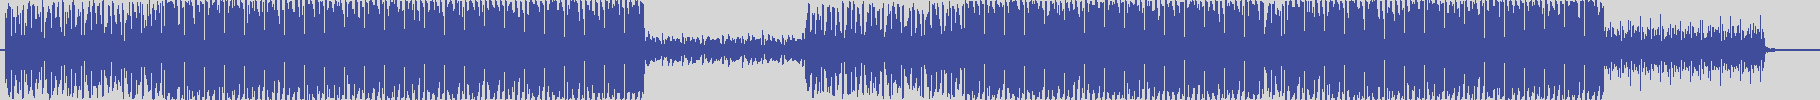 nf_boyz_records [NFY090] Deep Native - Lopes Mendes [Soulstice Mix] audio wave form